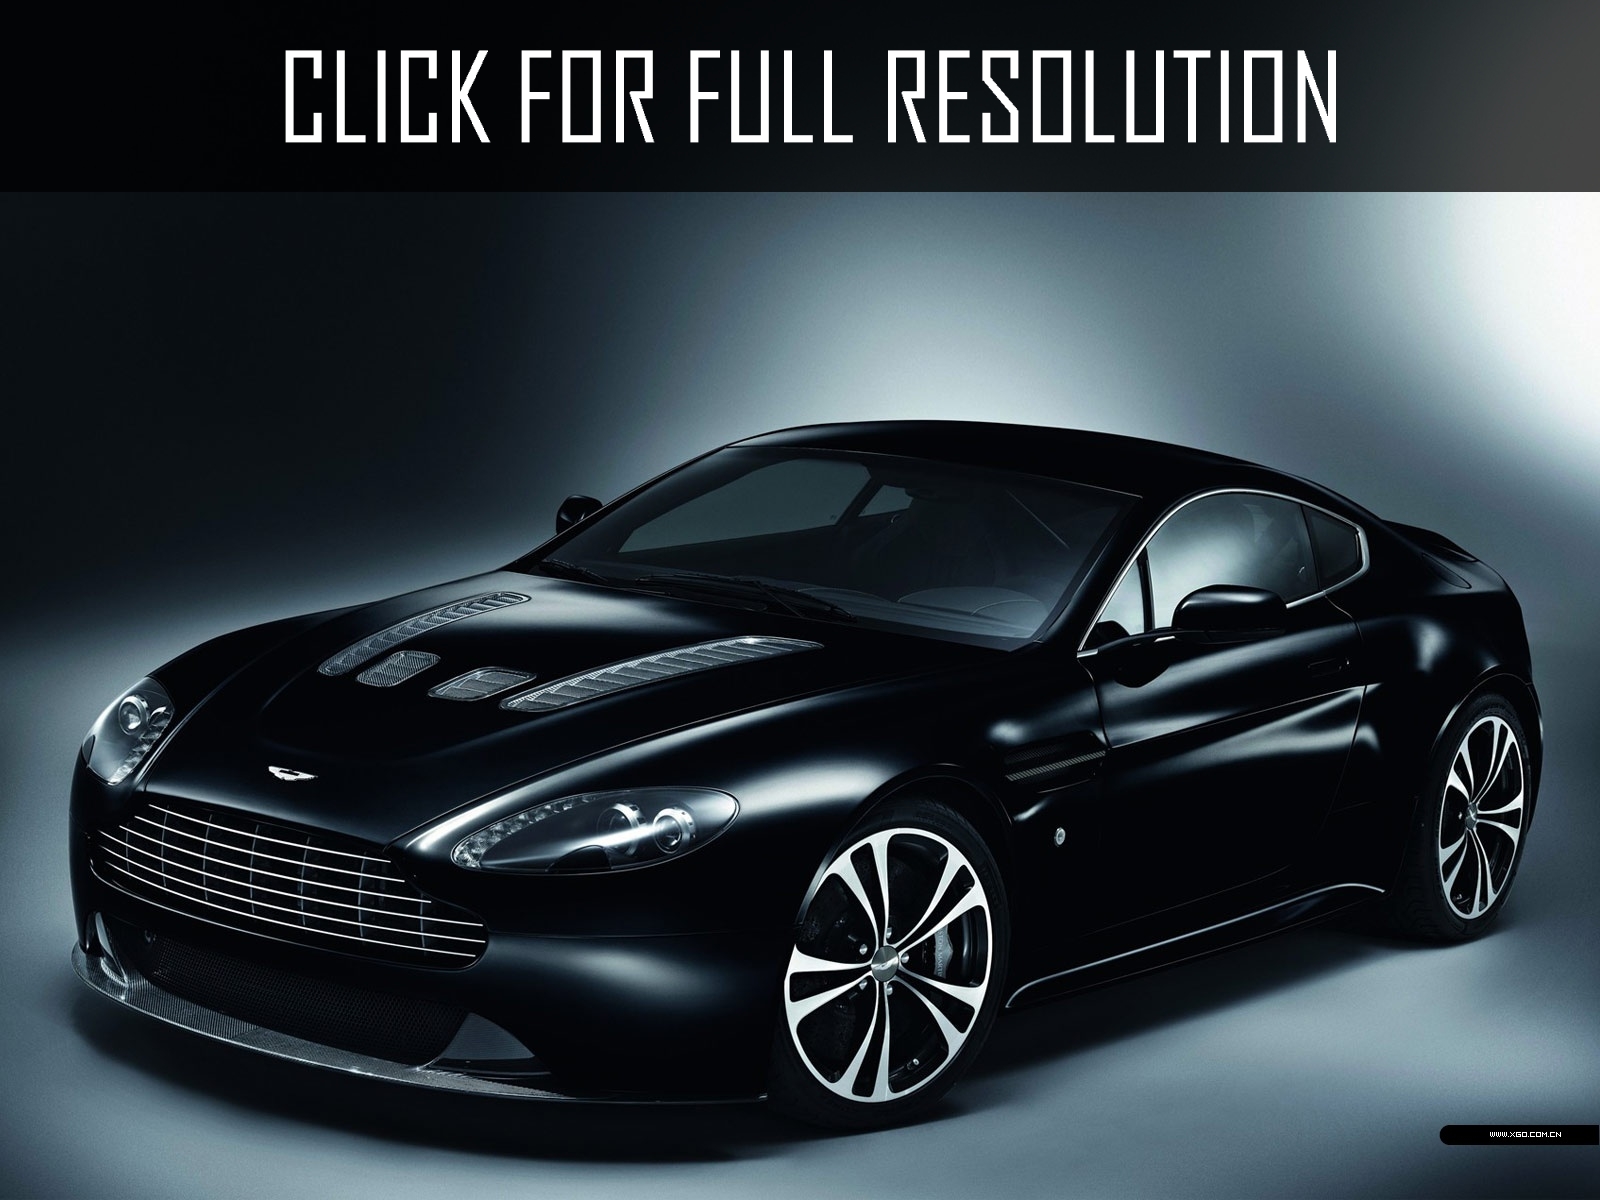 Aston Martin Vantage roadster